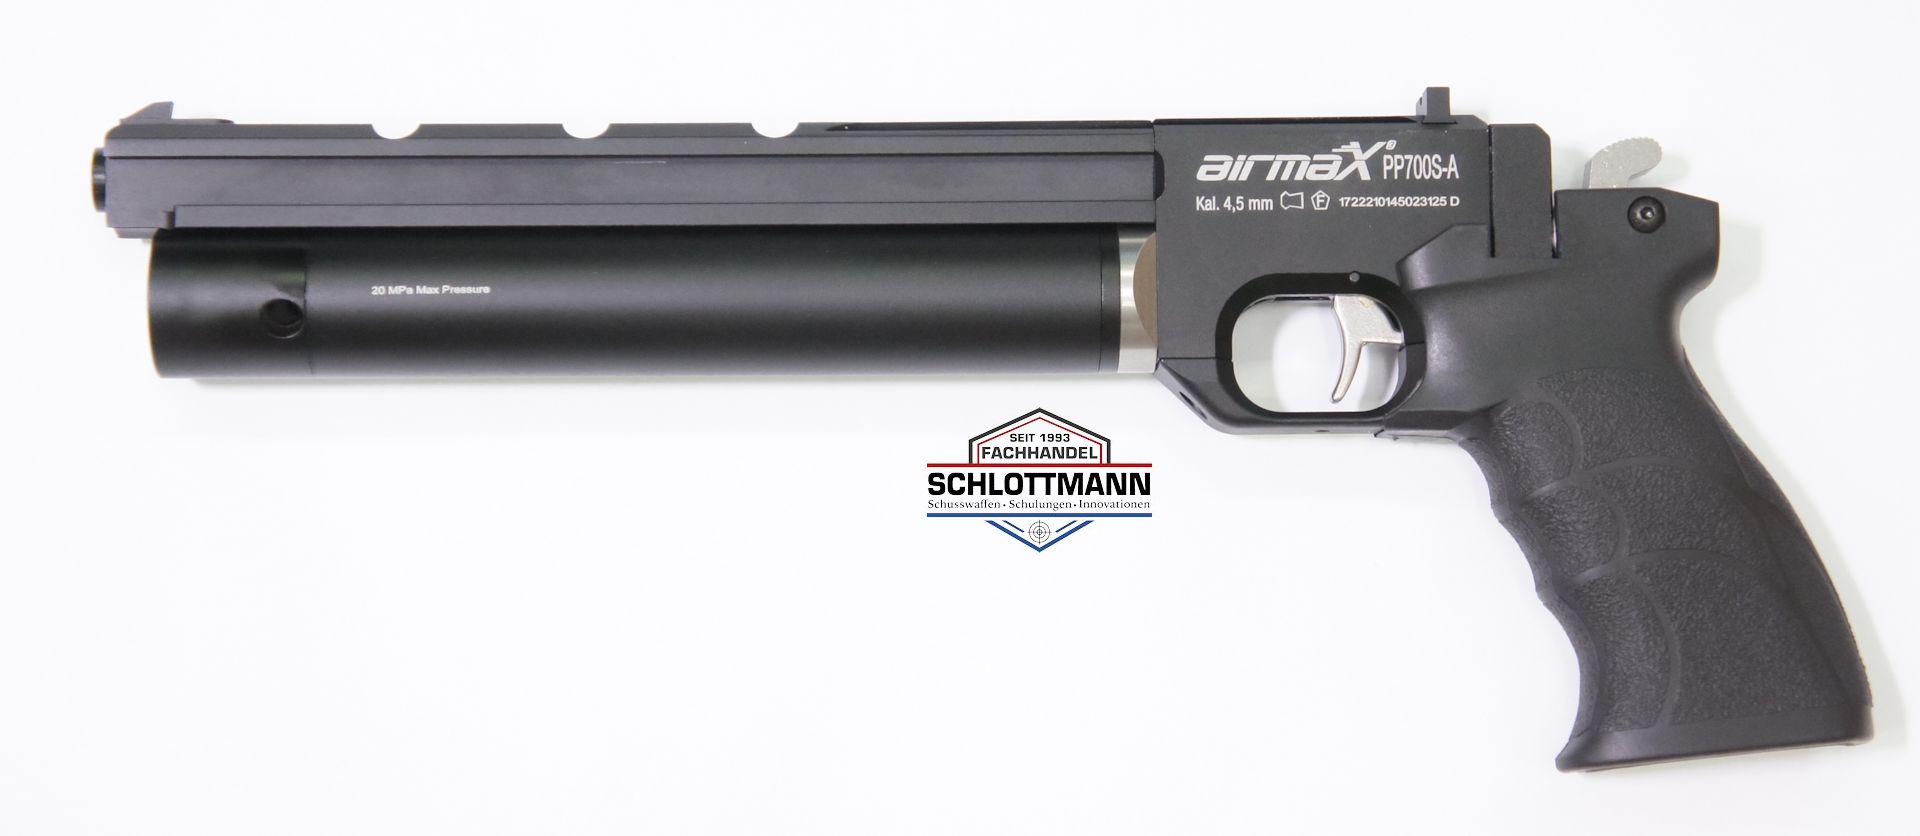 Pressluftpistole airmaX PP700S-A, Kaliber 4,5mm mit beschädigter Umverpackung